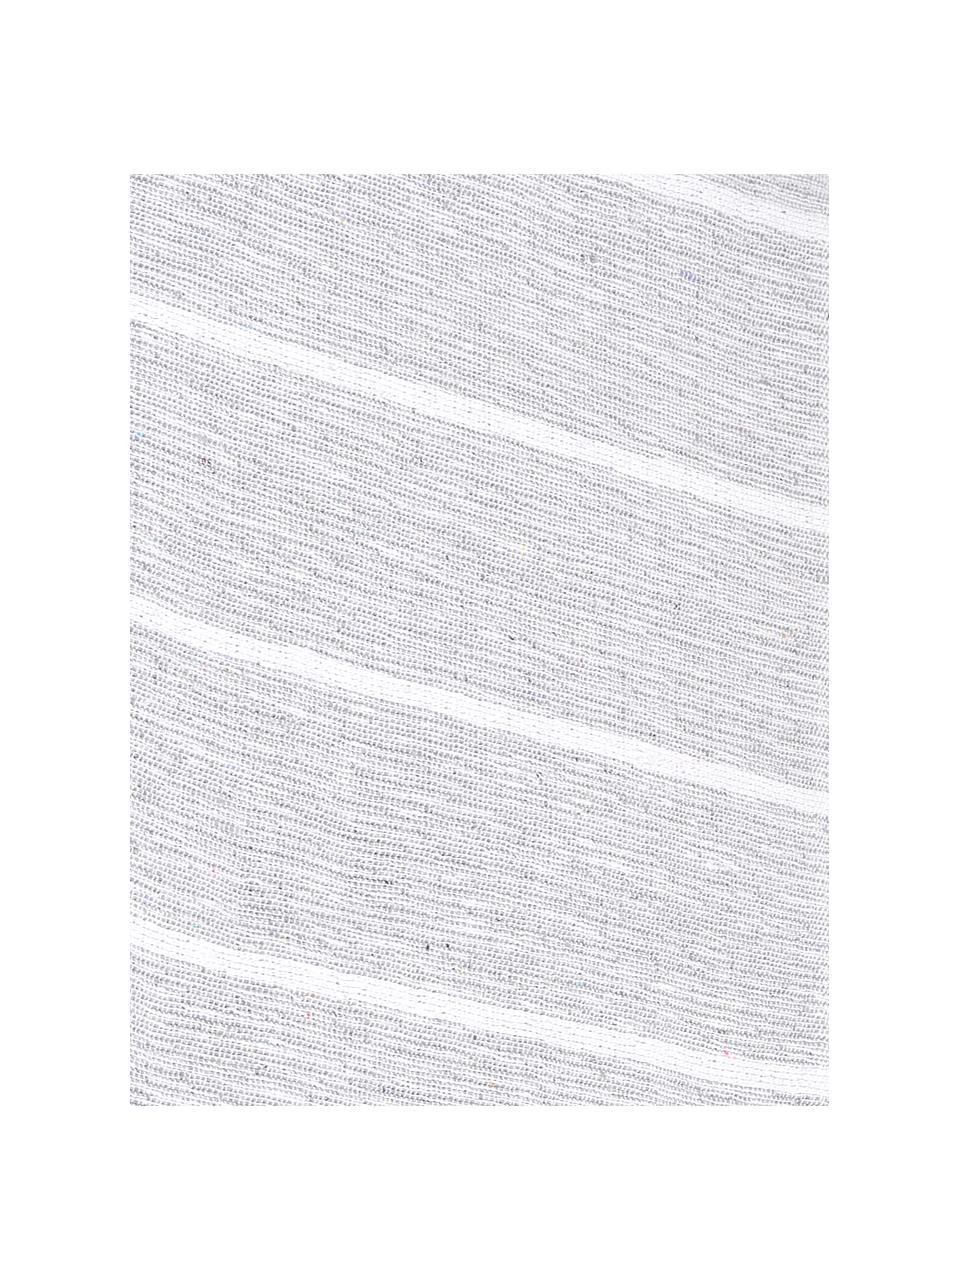 Gestreifte Tagesdecke Homely in Grau/Weiß, 80% Baumwolle, 20% Polyester, Graublau, Weiß, B 230 x L 250 cm (für Betten ab 160 x 200)